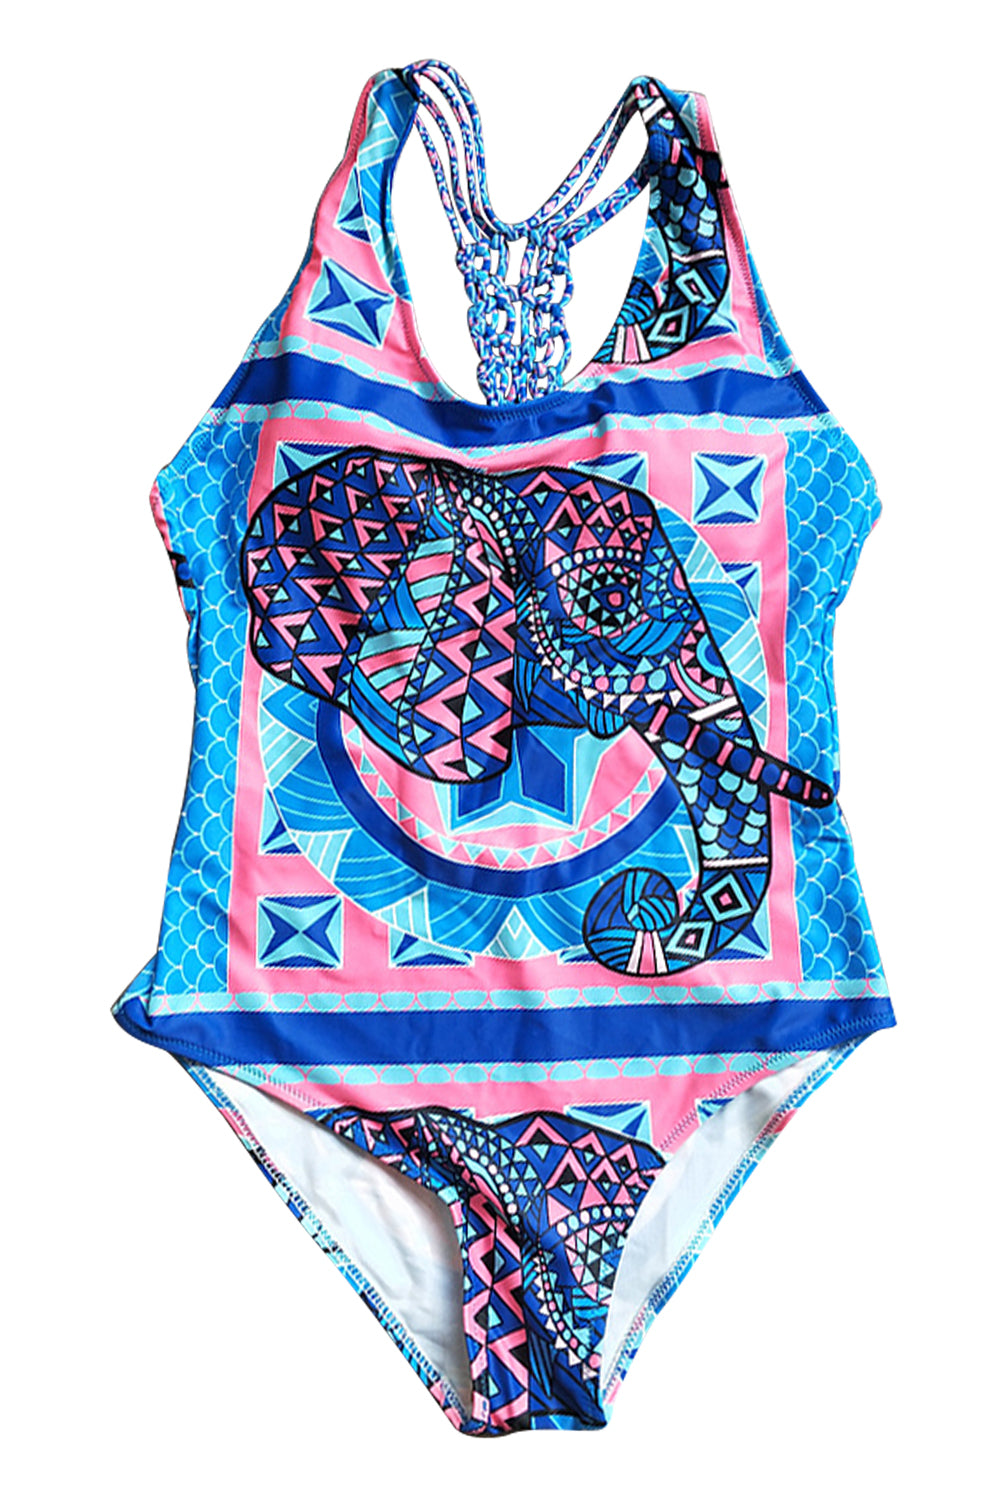 Iyasson Blue Animal print With Handmade Braided Ties One-piece swimsuit